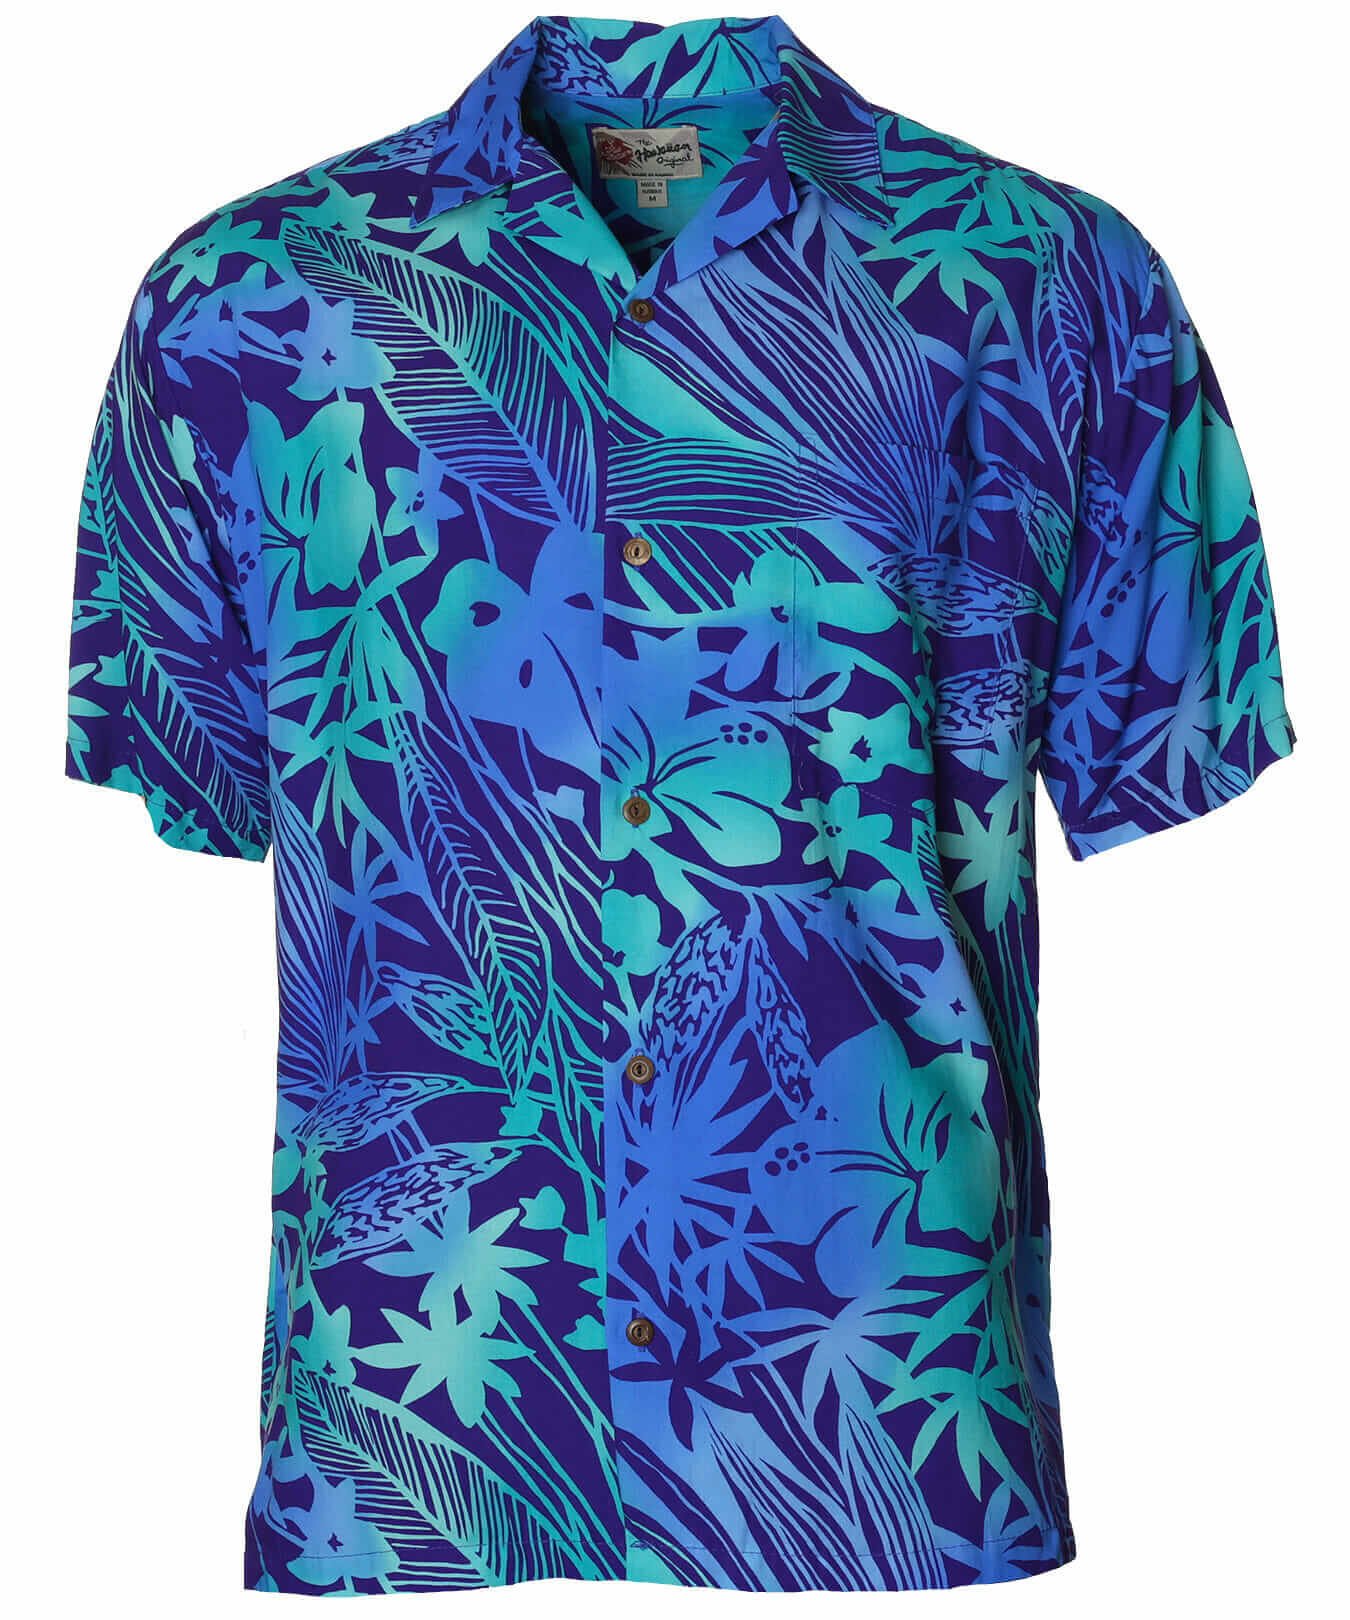 Manaloa Mens Aloha Shirt Blue